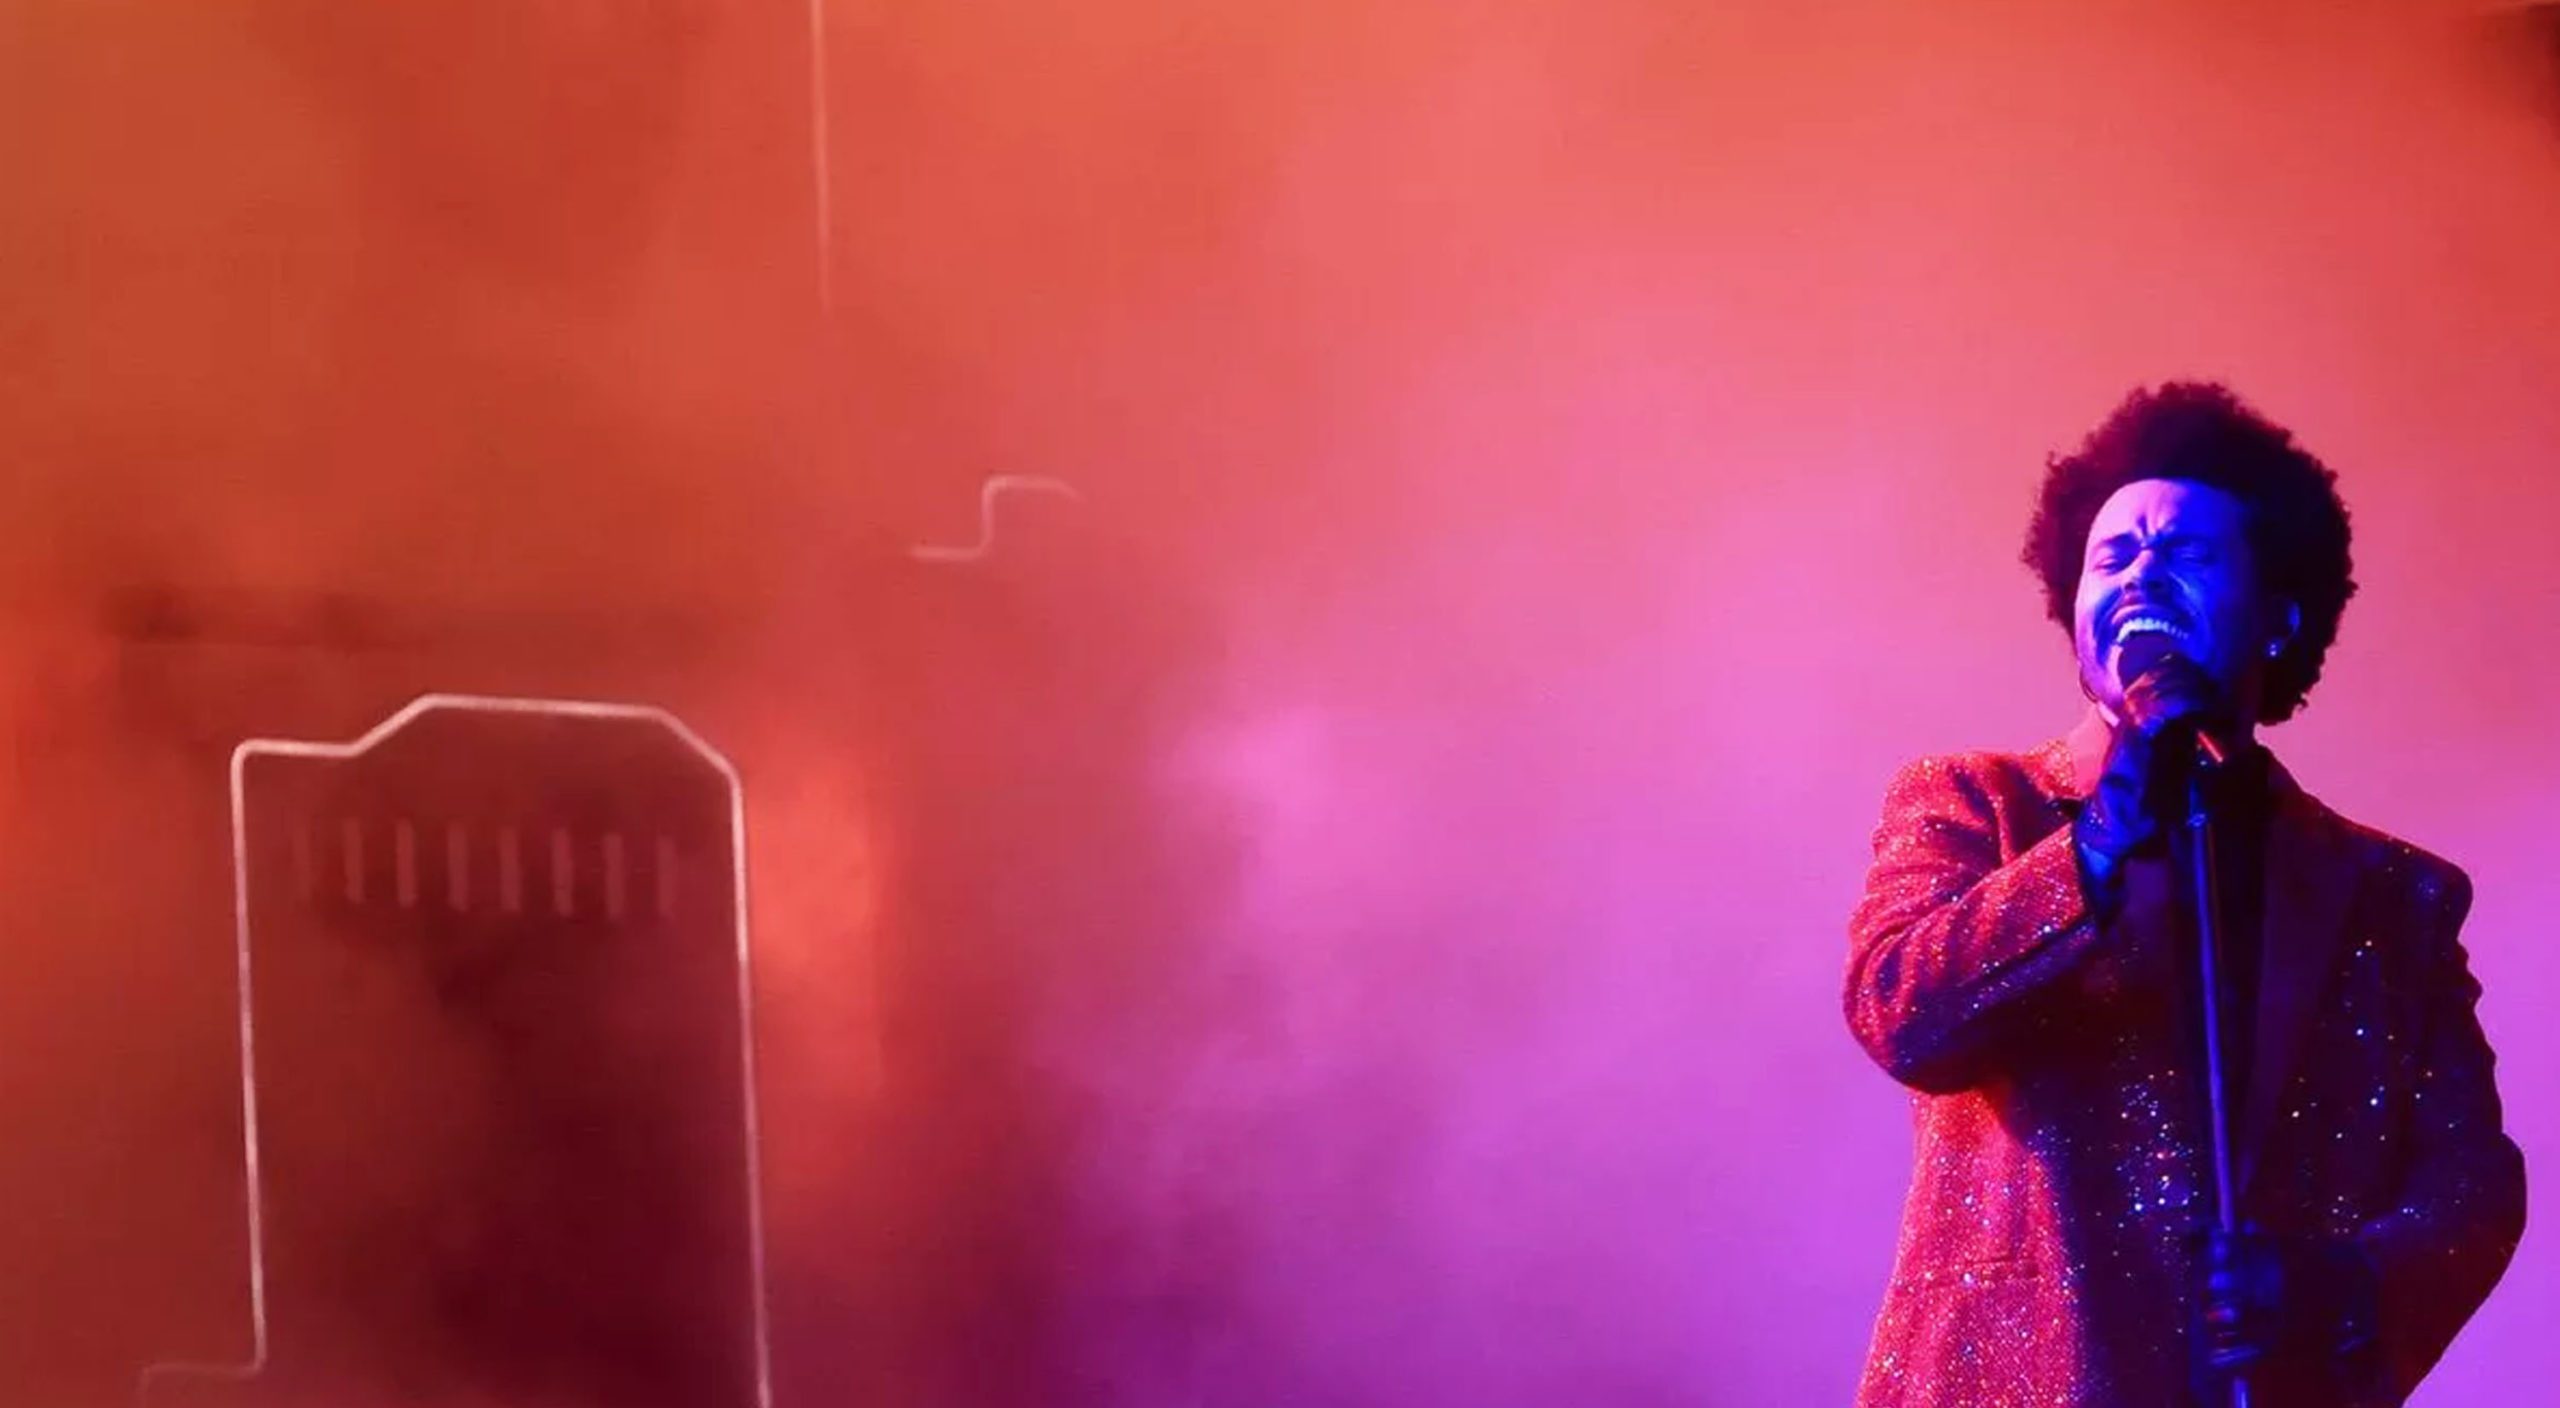 The Weeknd Shares New 'Live at SoFi Stadium' Album